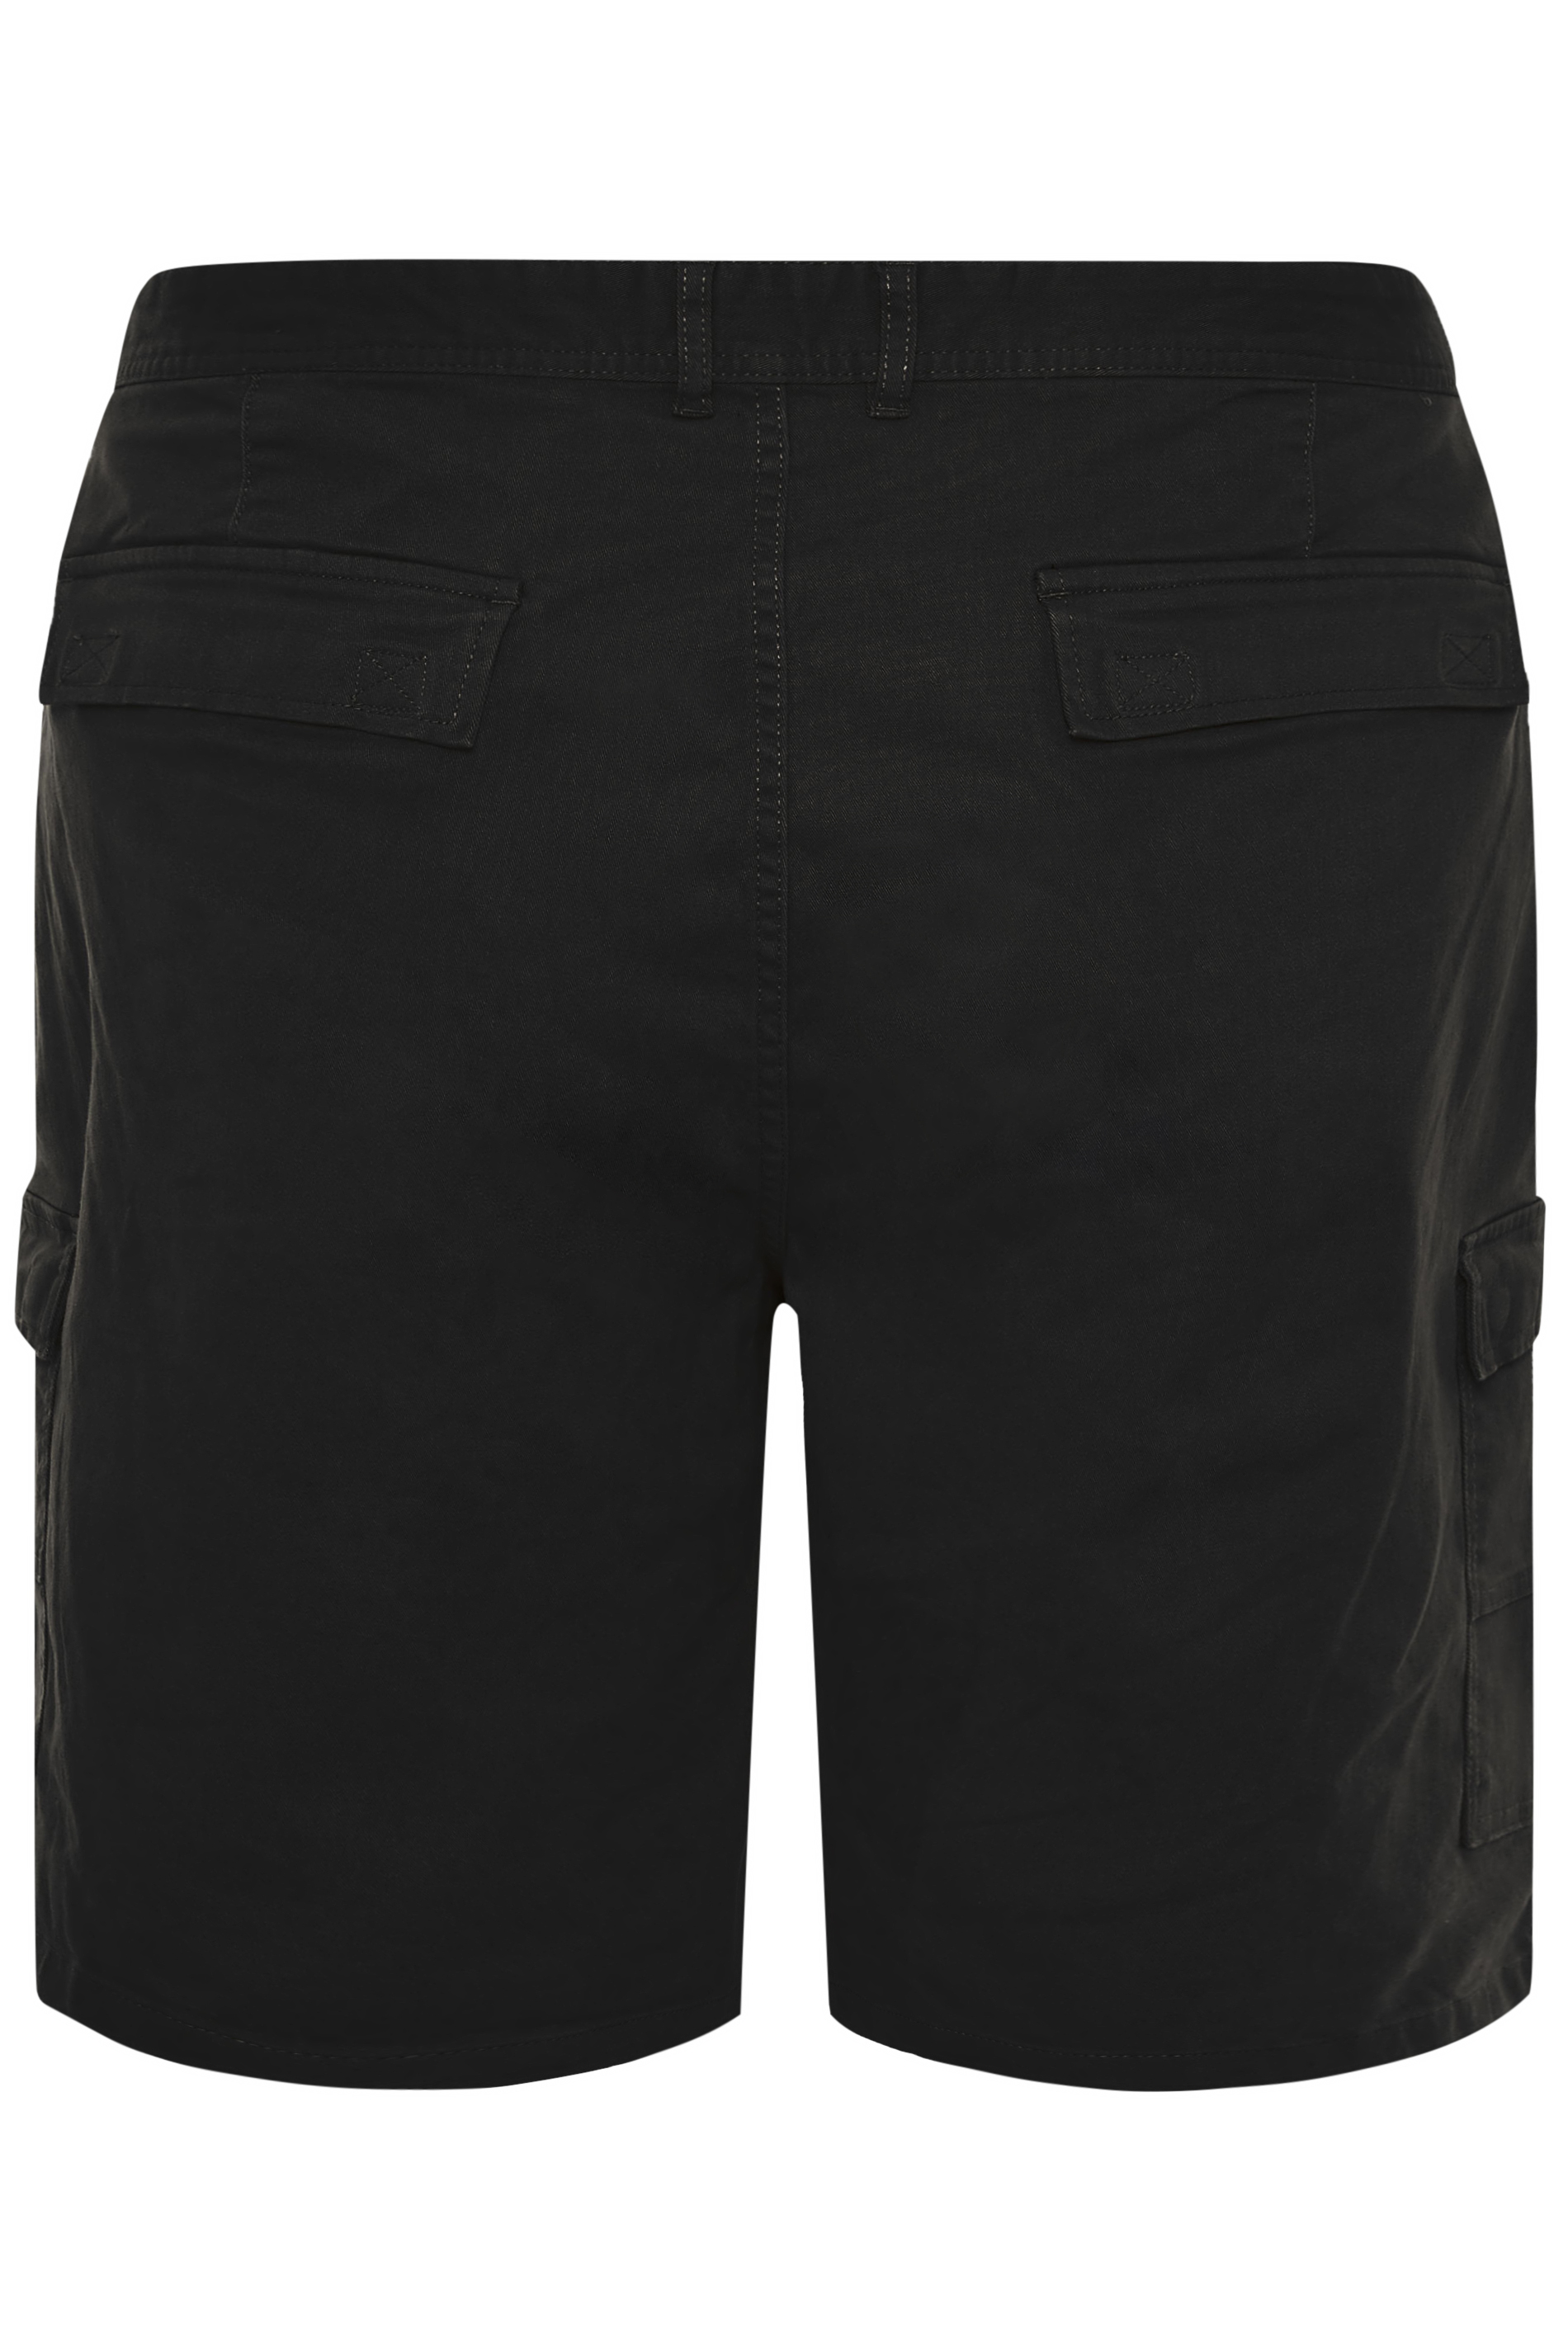 BadRhino Black Stretch Cargo Shorts | BadRhino